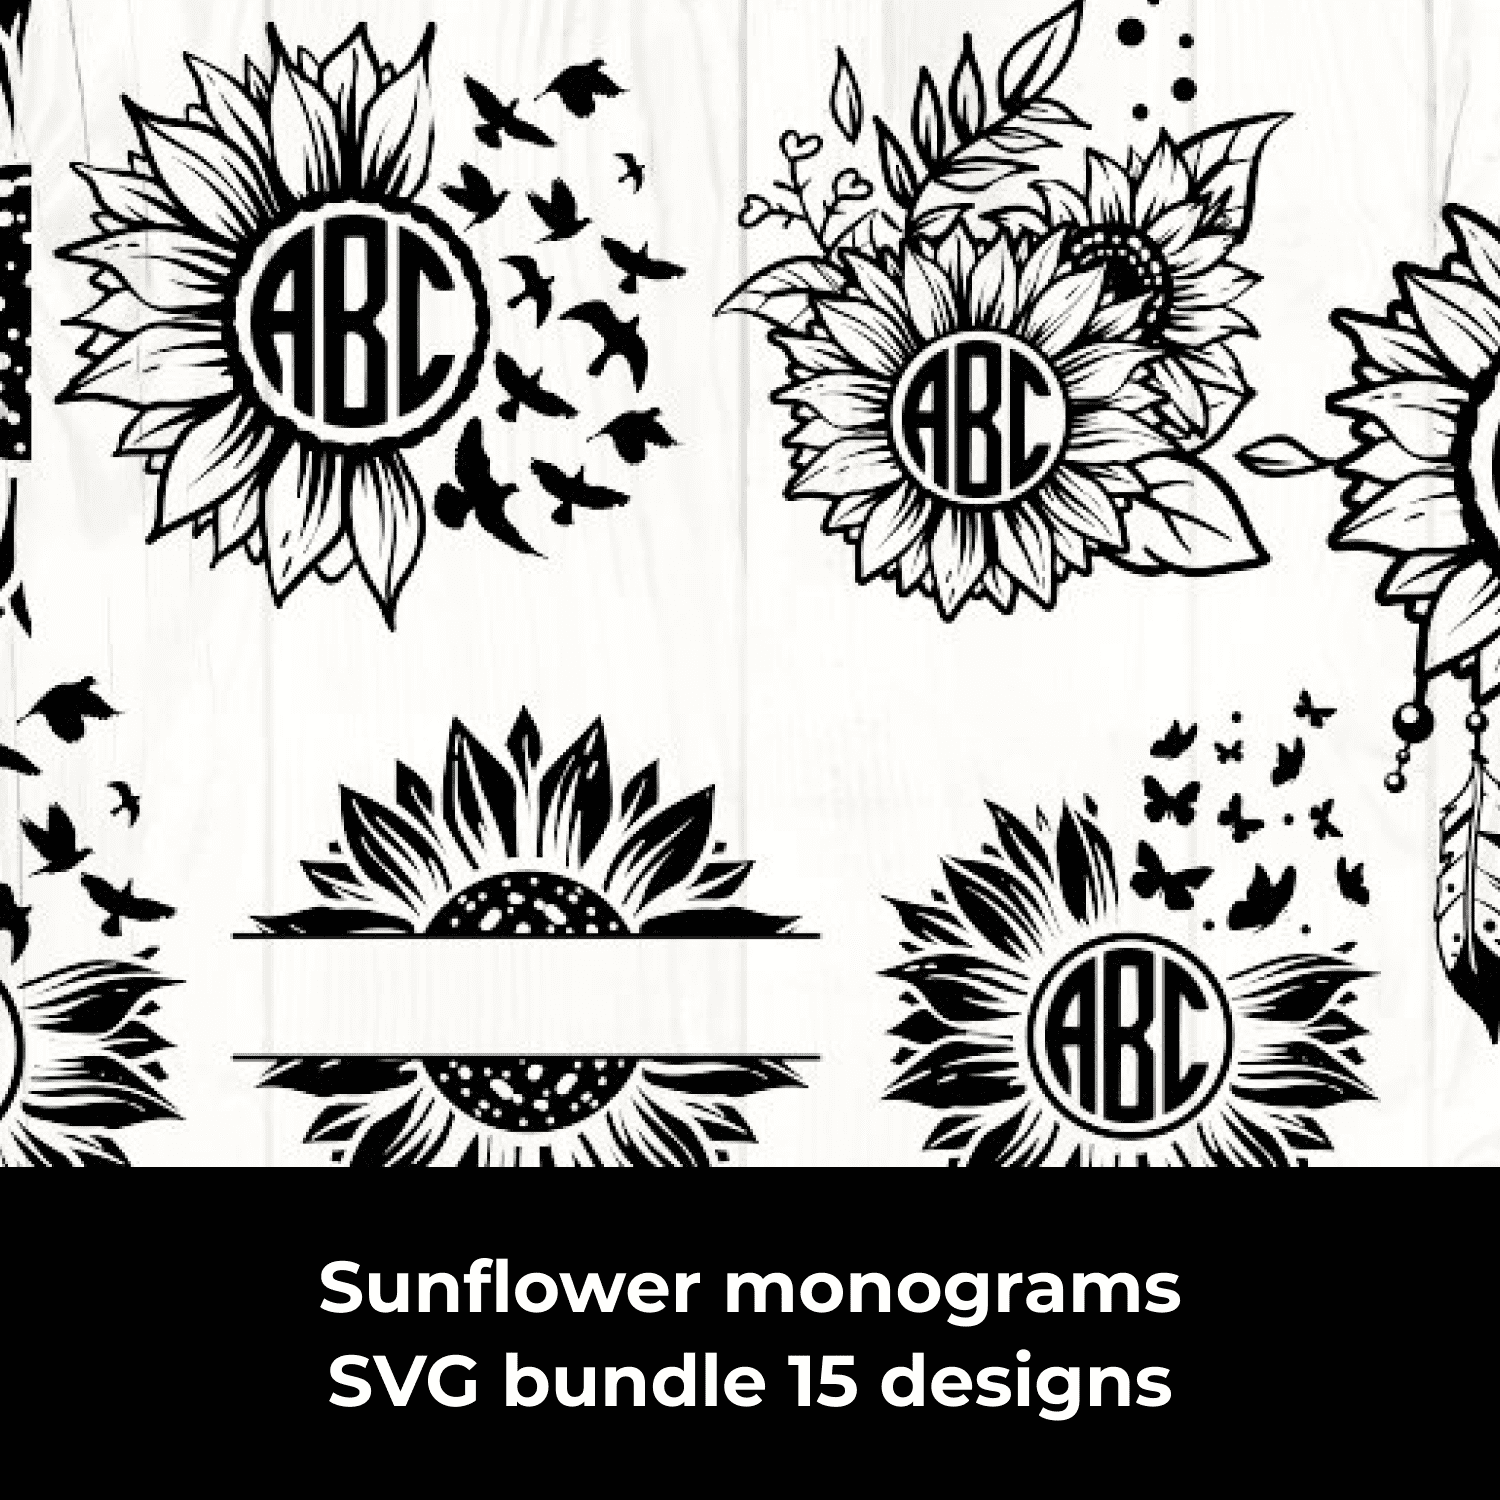 Sunflower monograms SVG bundle 15 designs cover.